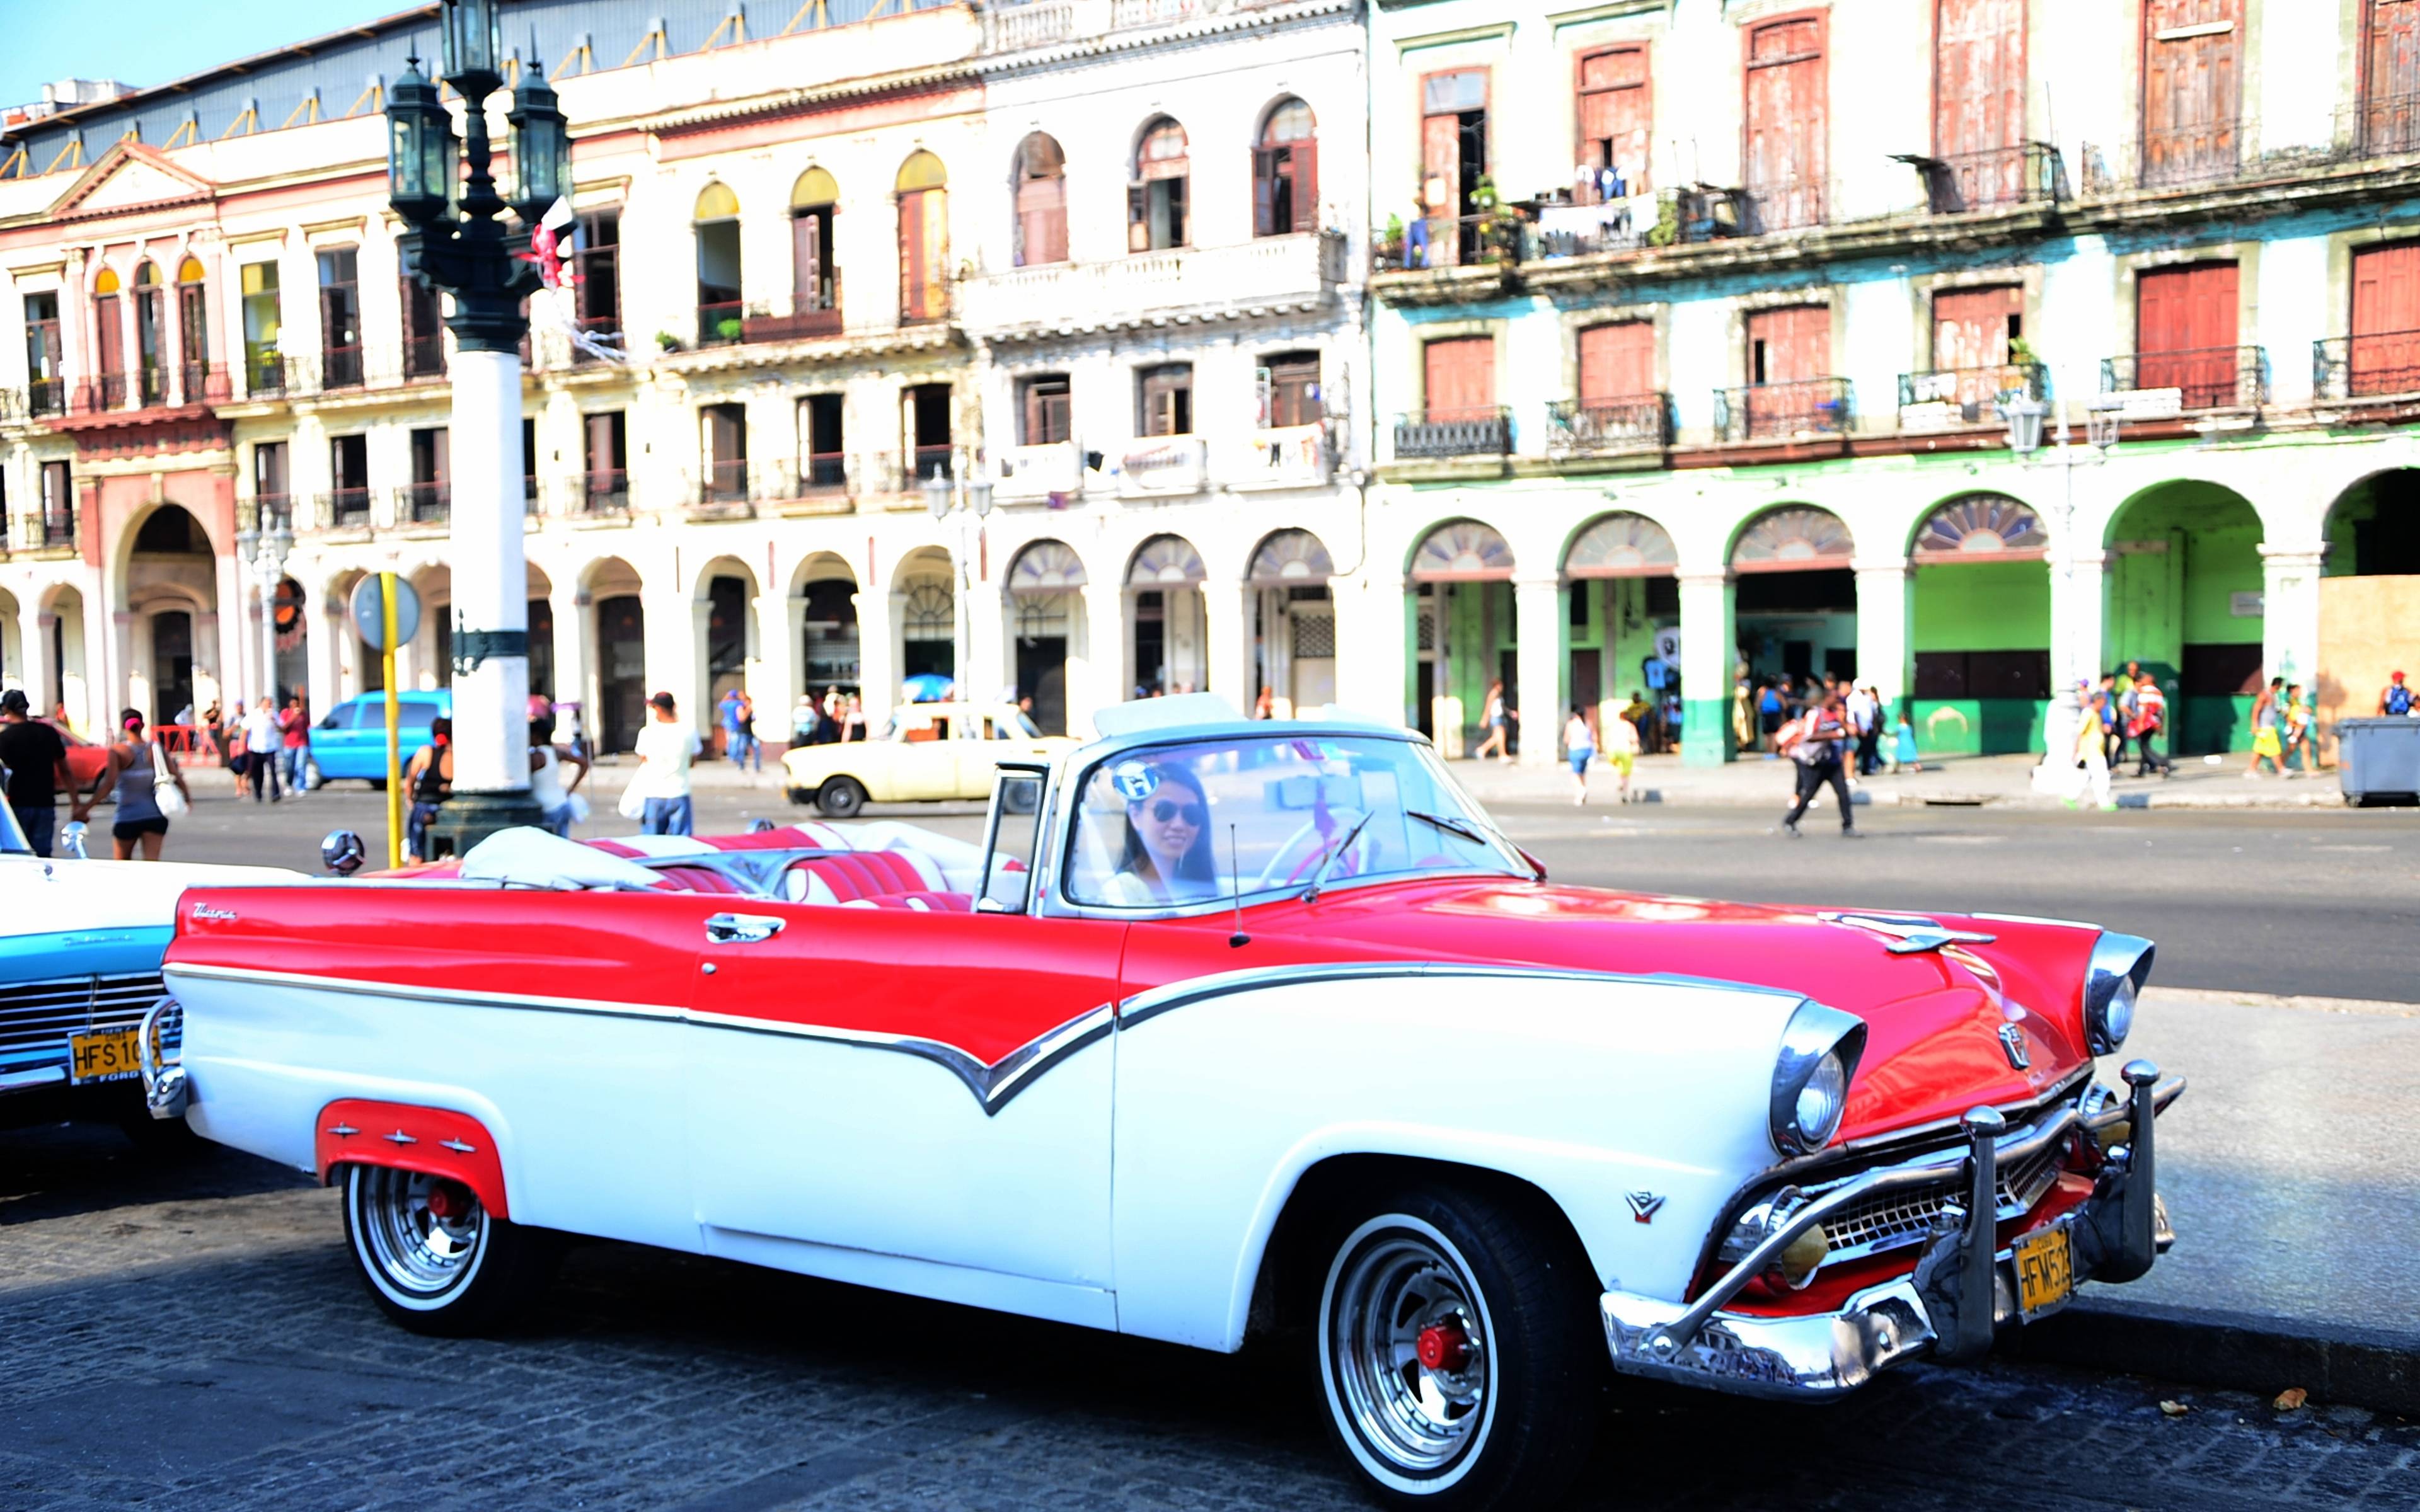 Bienvenida a La Habana 